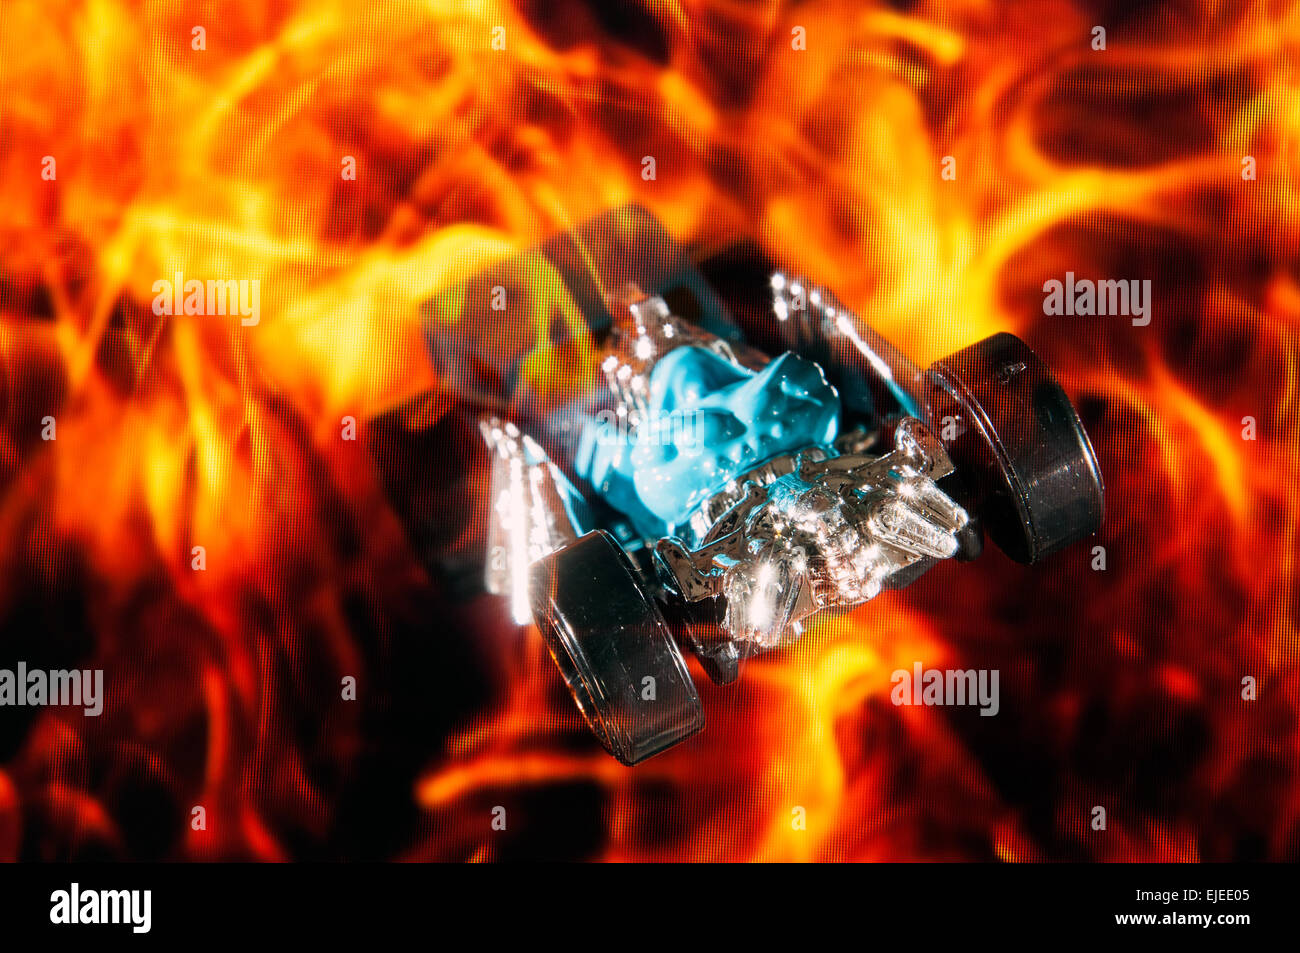 Generic hot rod car in fire in studio setting Stock Photo